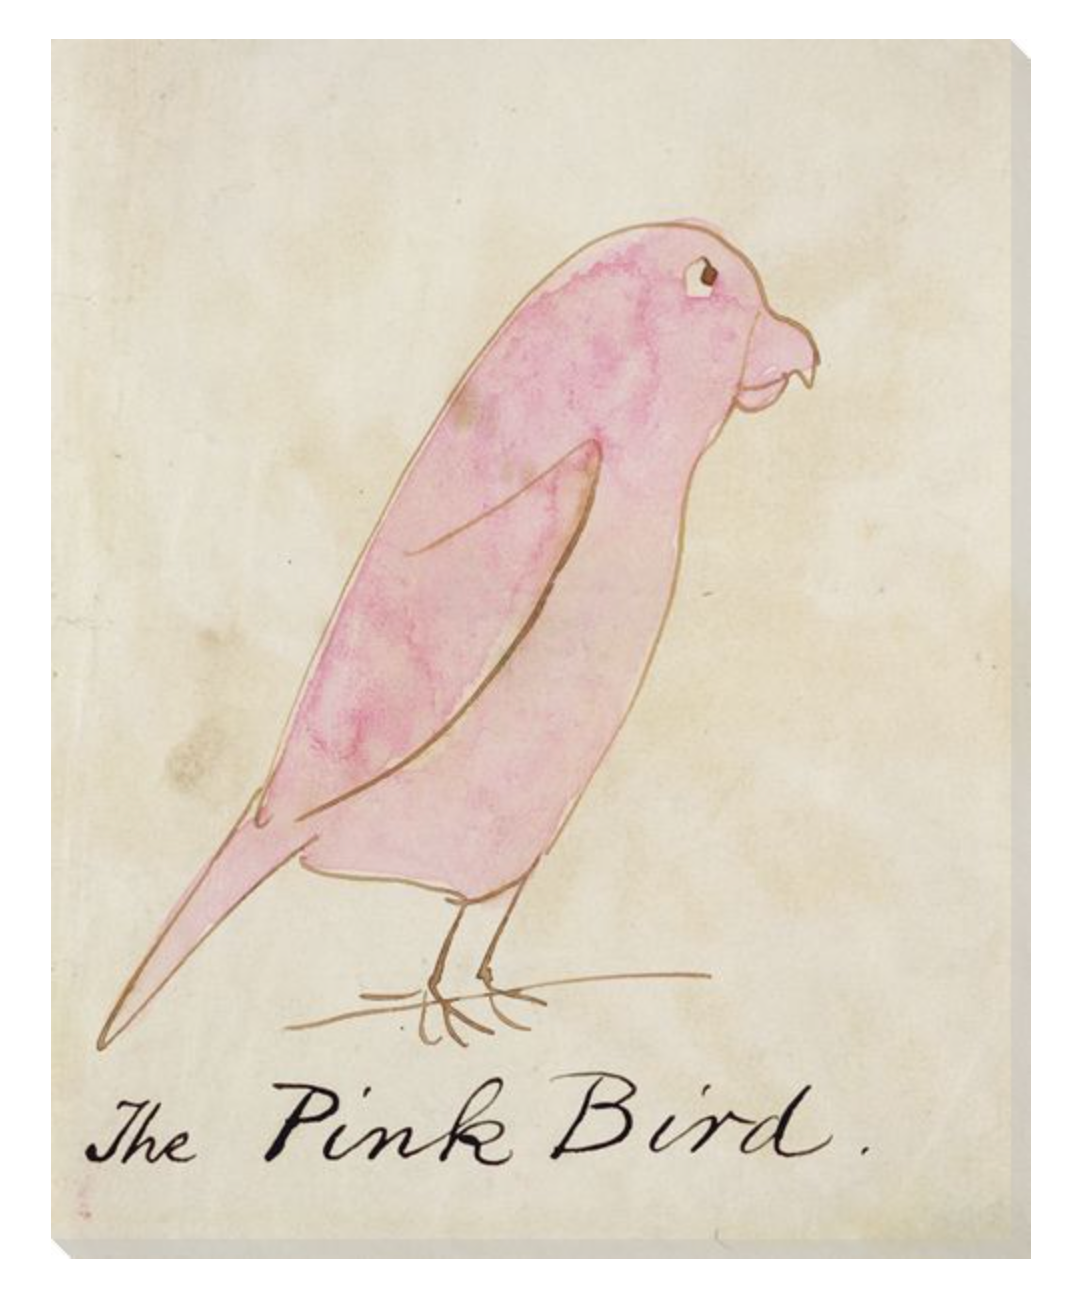 THE PINK BIRD